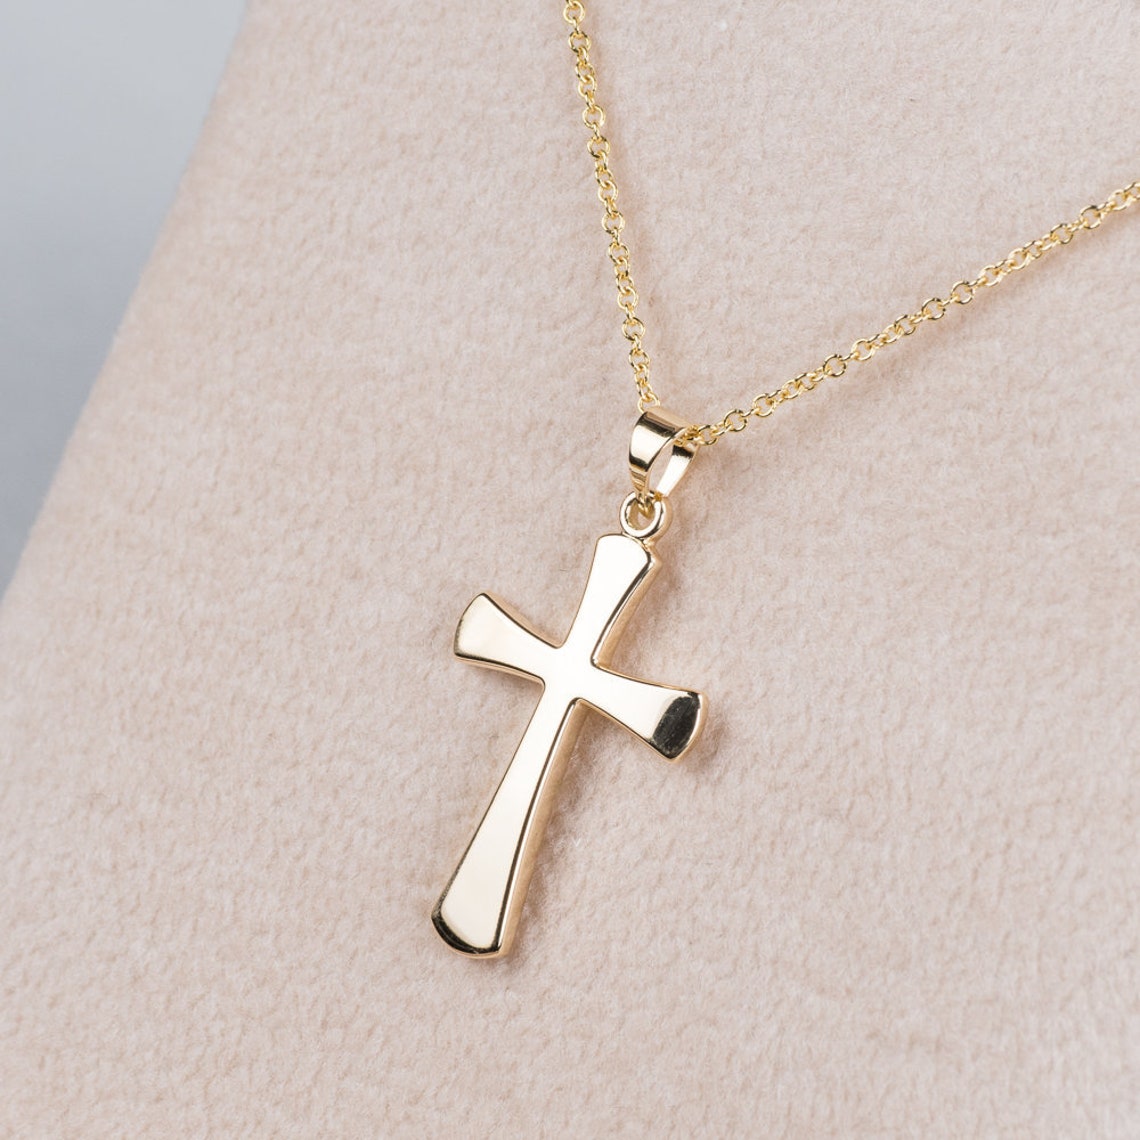 Solid Gold Minimal Cross Pendant Christmas Jewelry. 14k 18k - Etsy